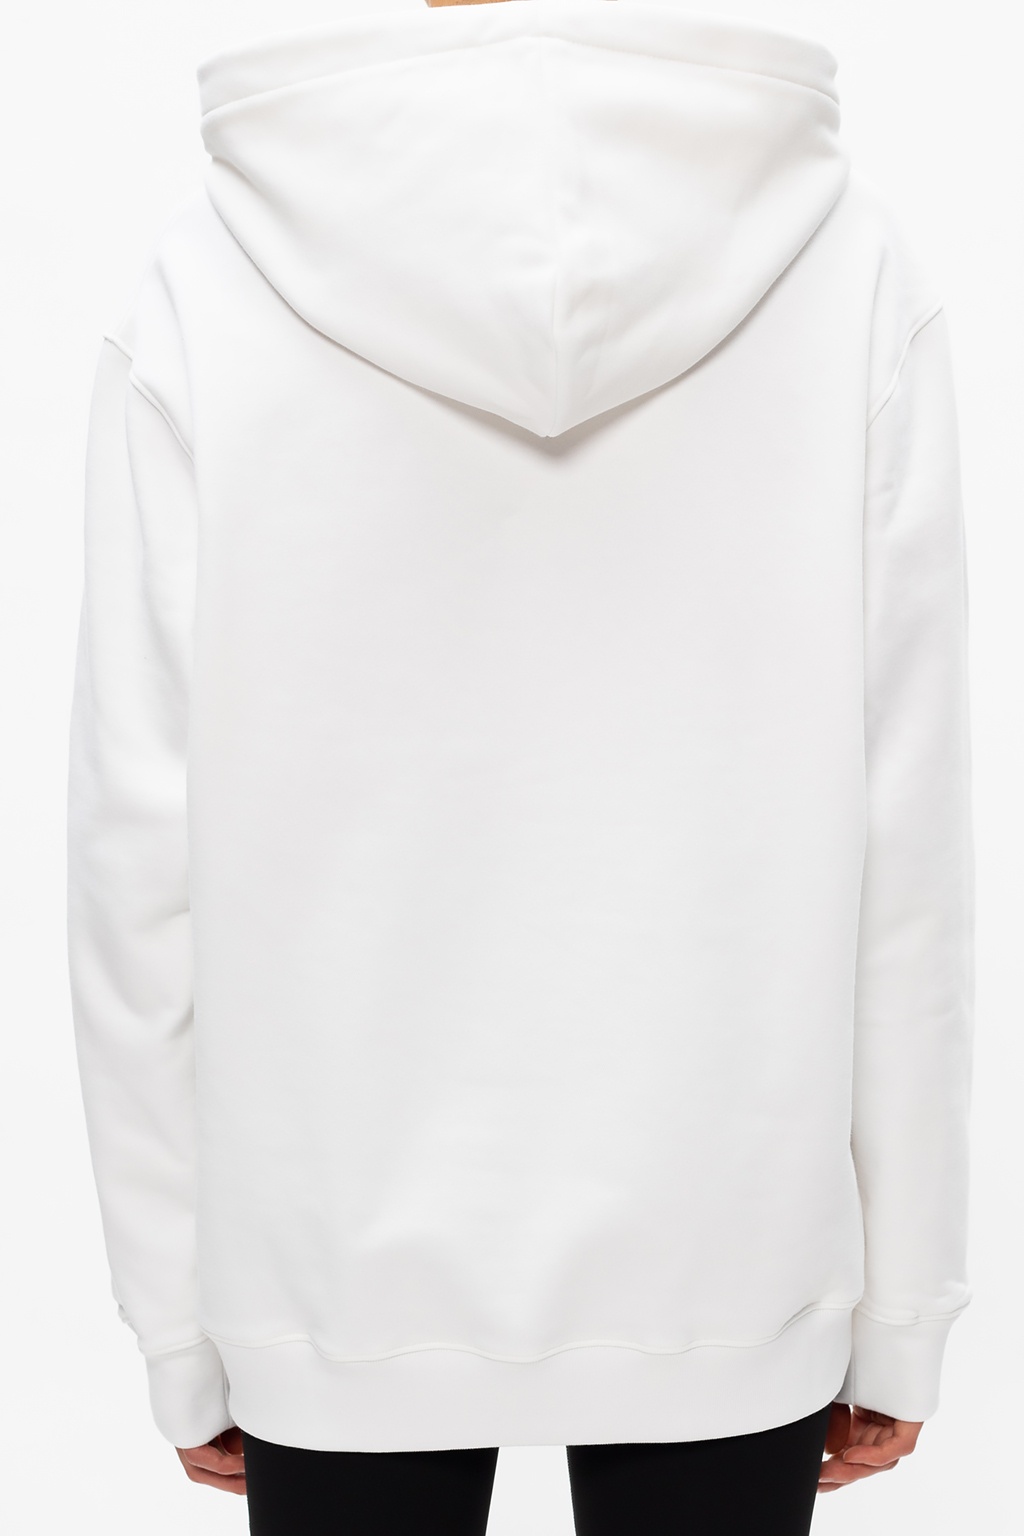 Moschino Printed hoodie | Women's Clothing | IetpShops